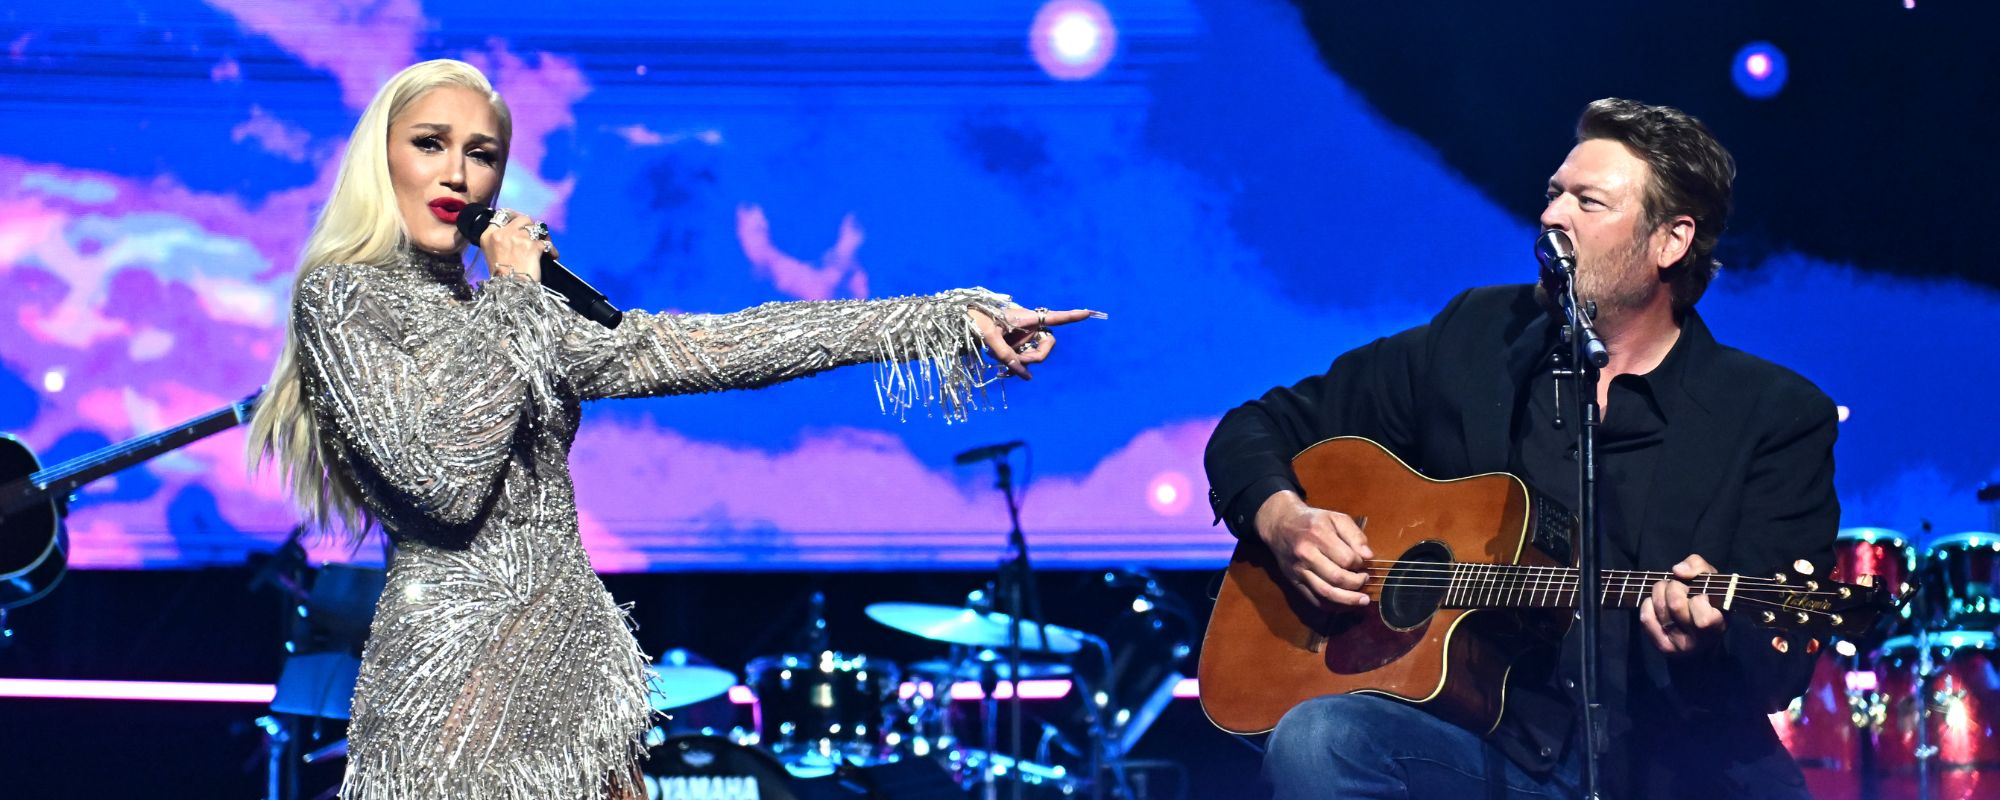 Blake Shelton and Gwen Stefani Drive ACM Awards Audience Wild With “Purple Irises” Performance